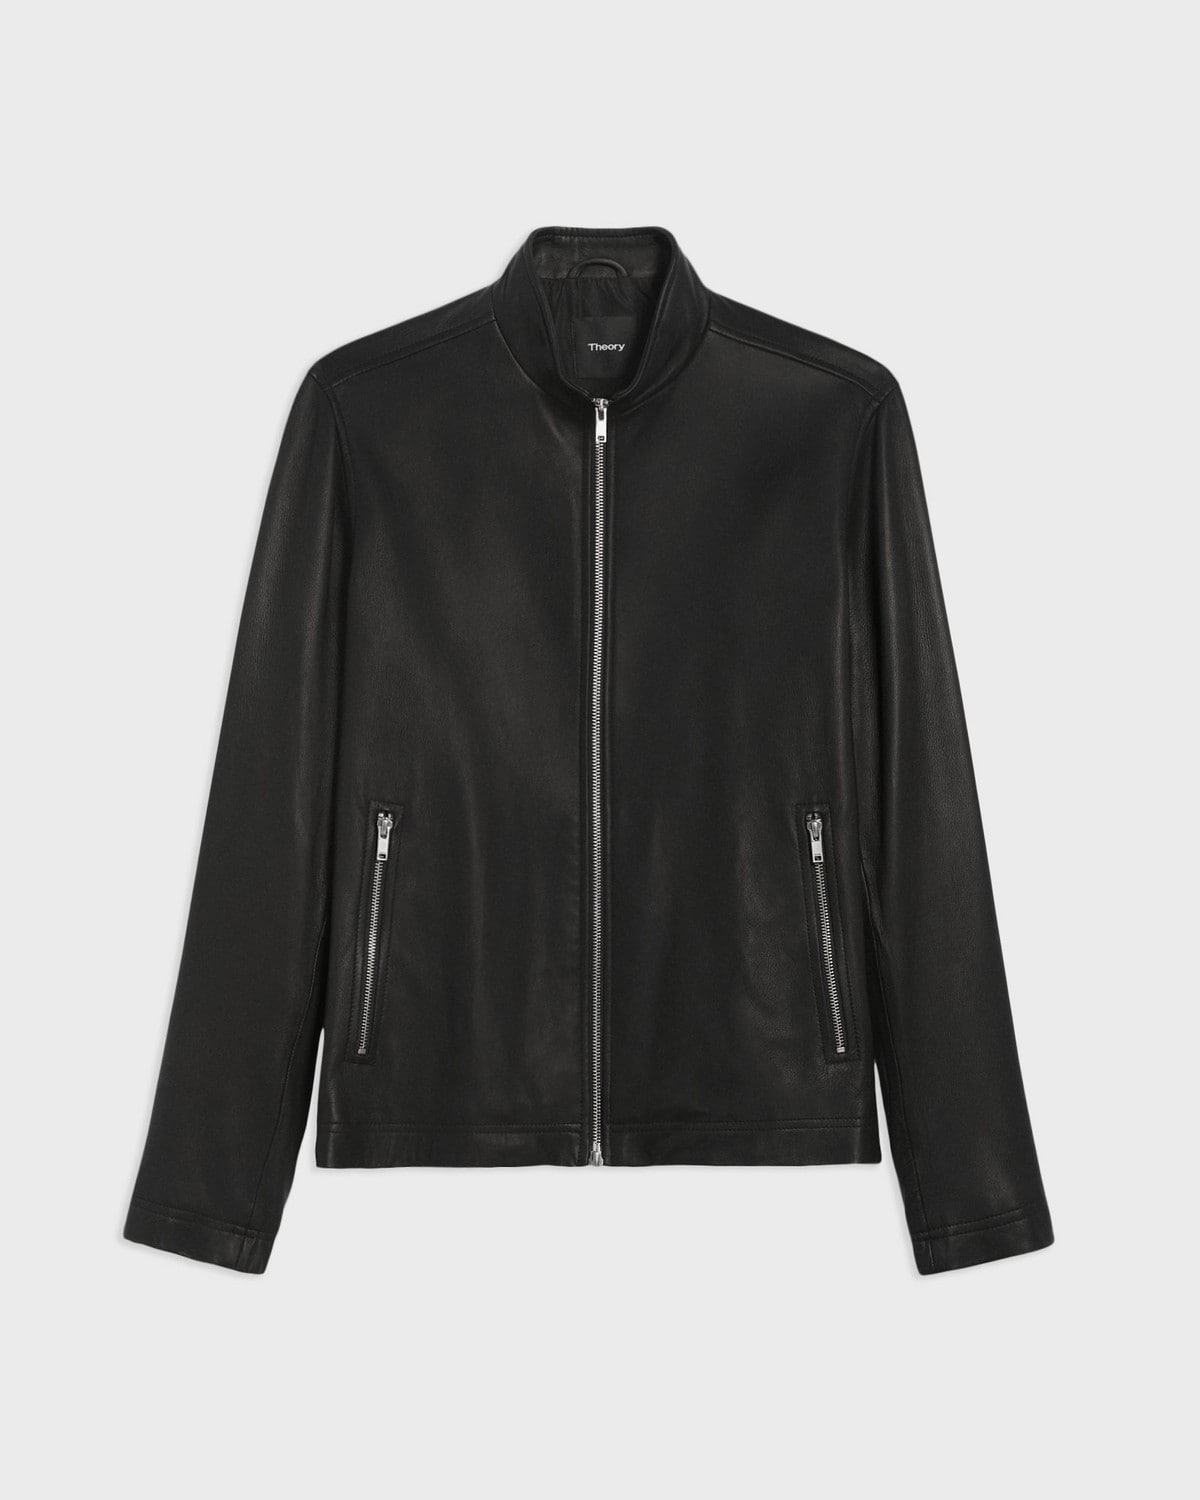 Morvek Zip Jacket in Leather